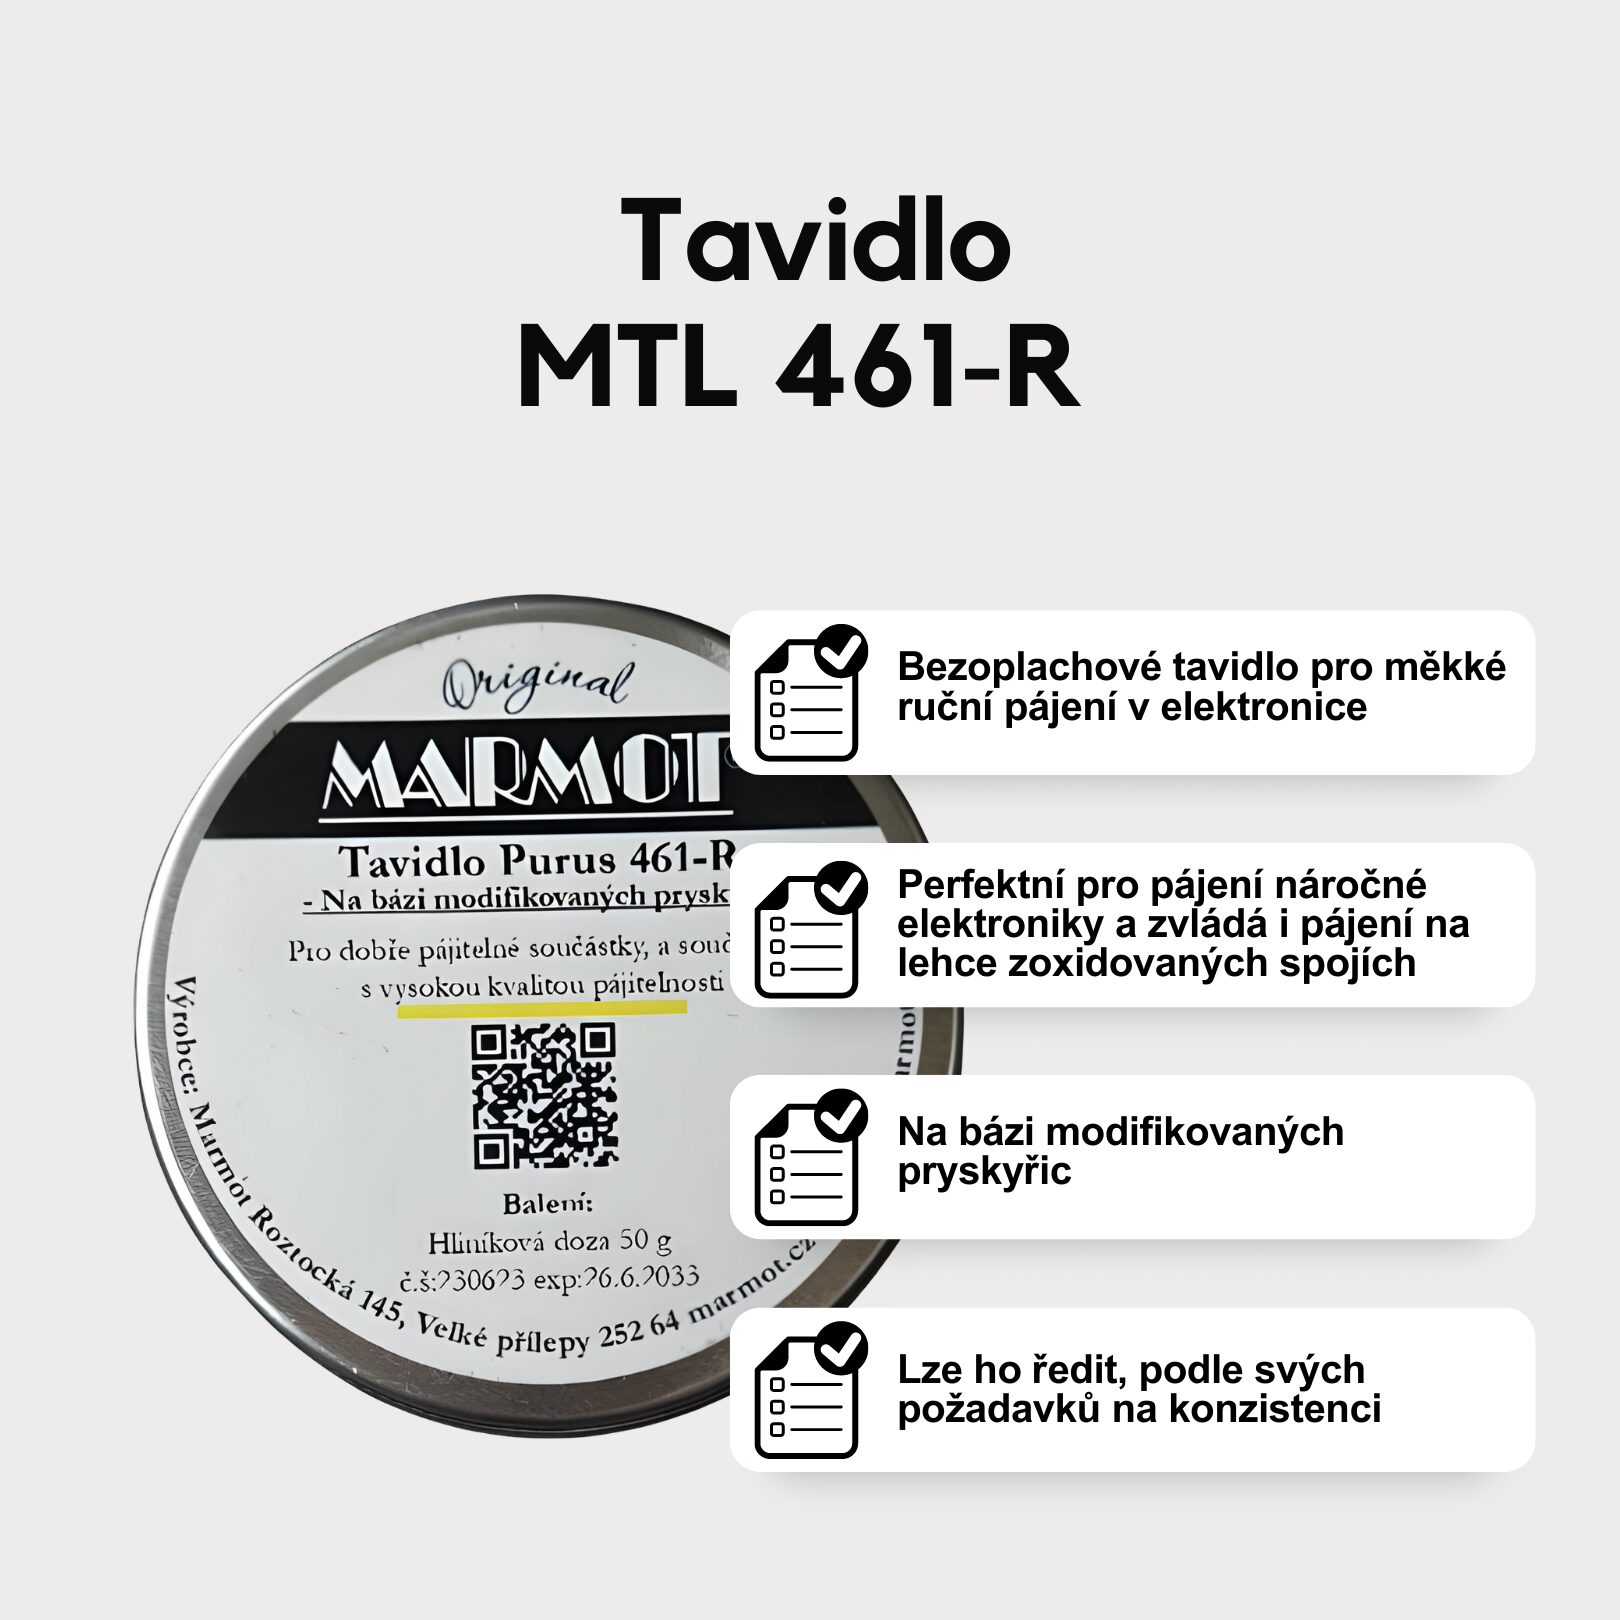 Tavidlo MTL 461-R